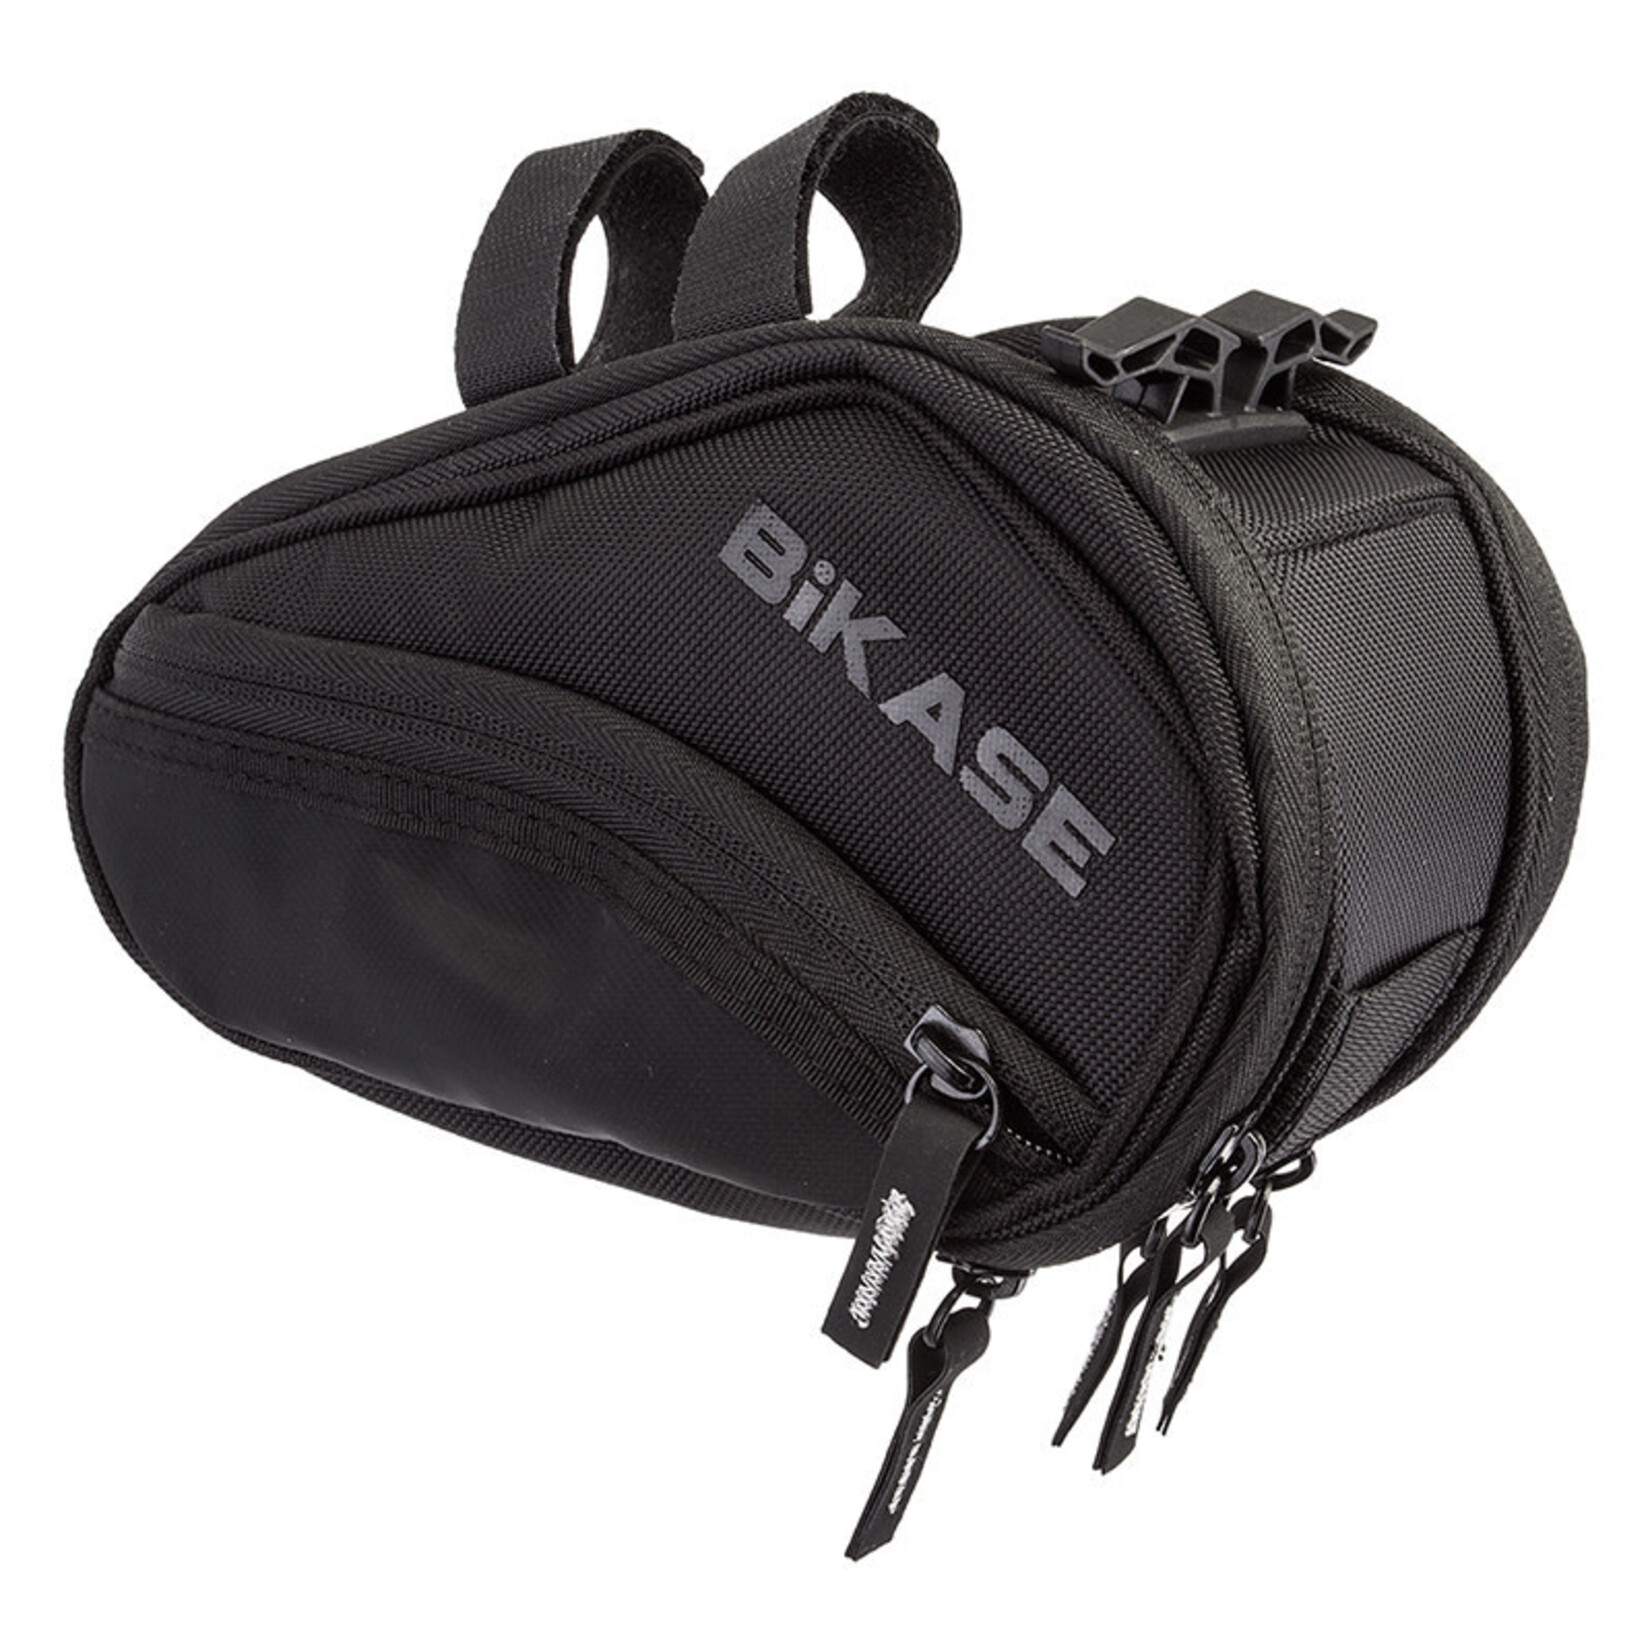 BiKASE WING SIDE SEAT BAG OPENS ON THE SIDE